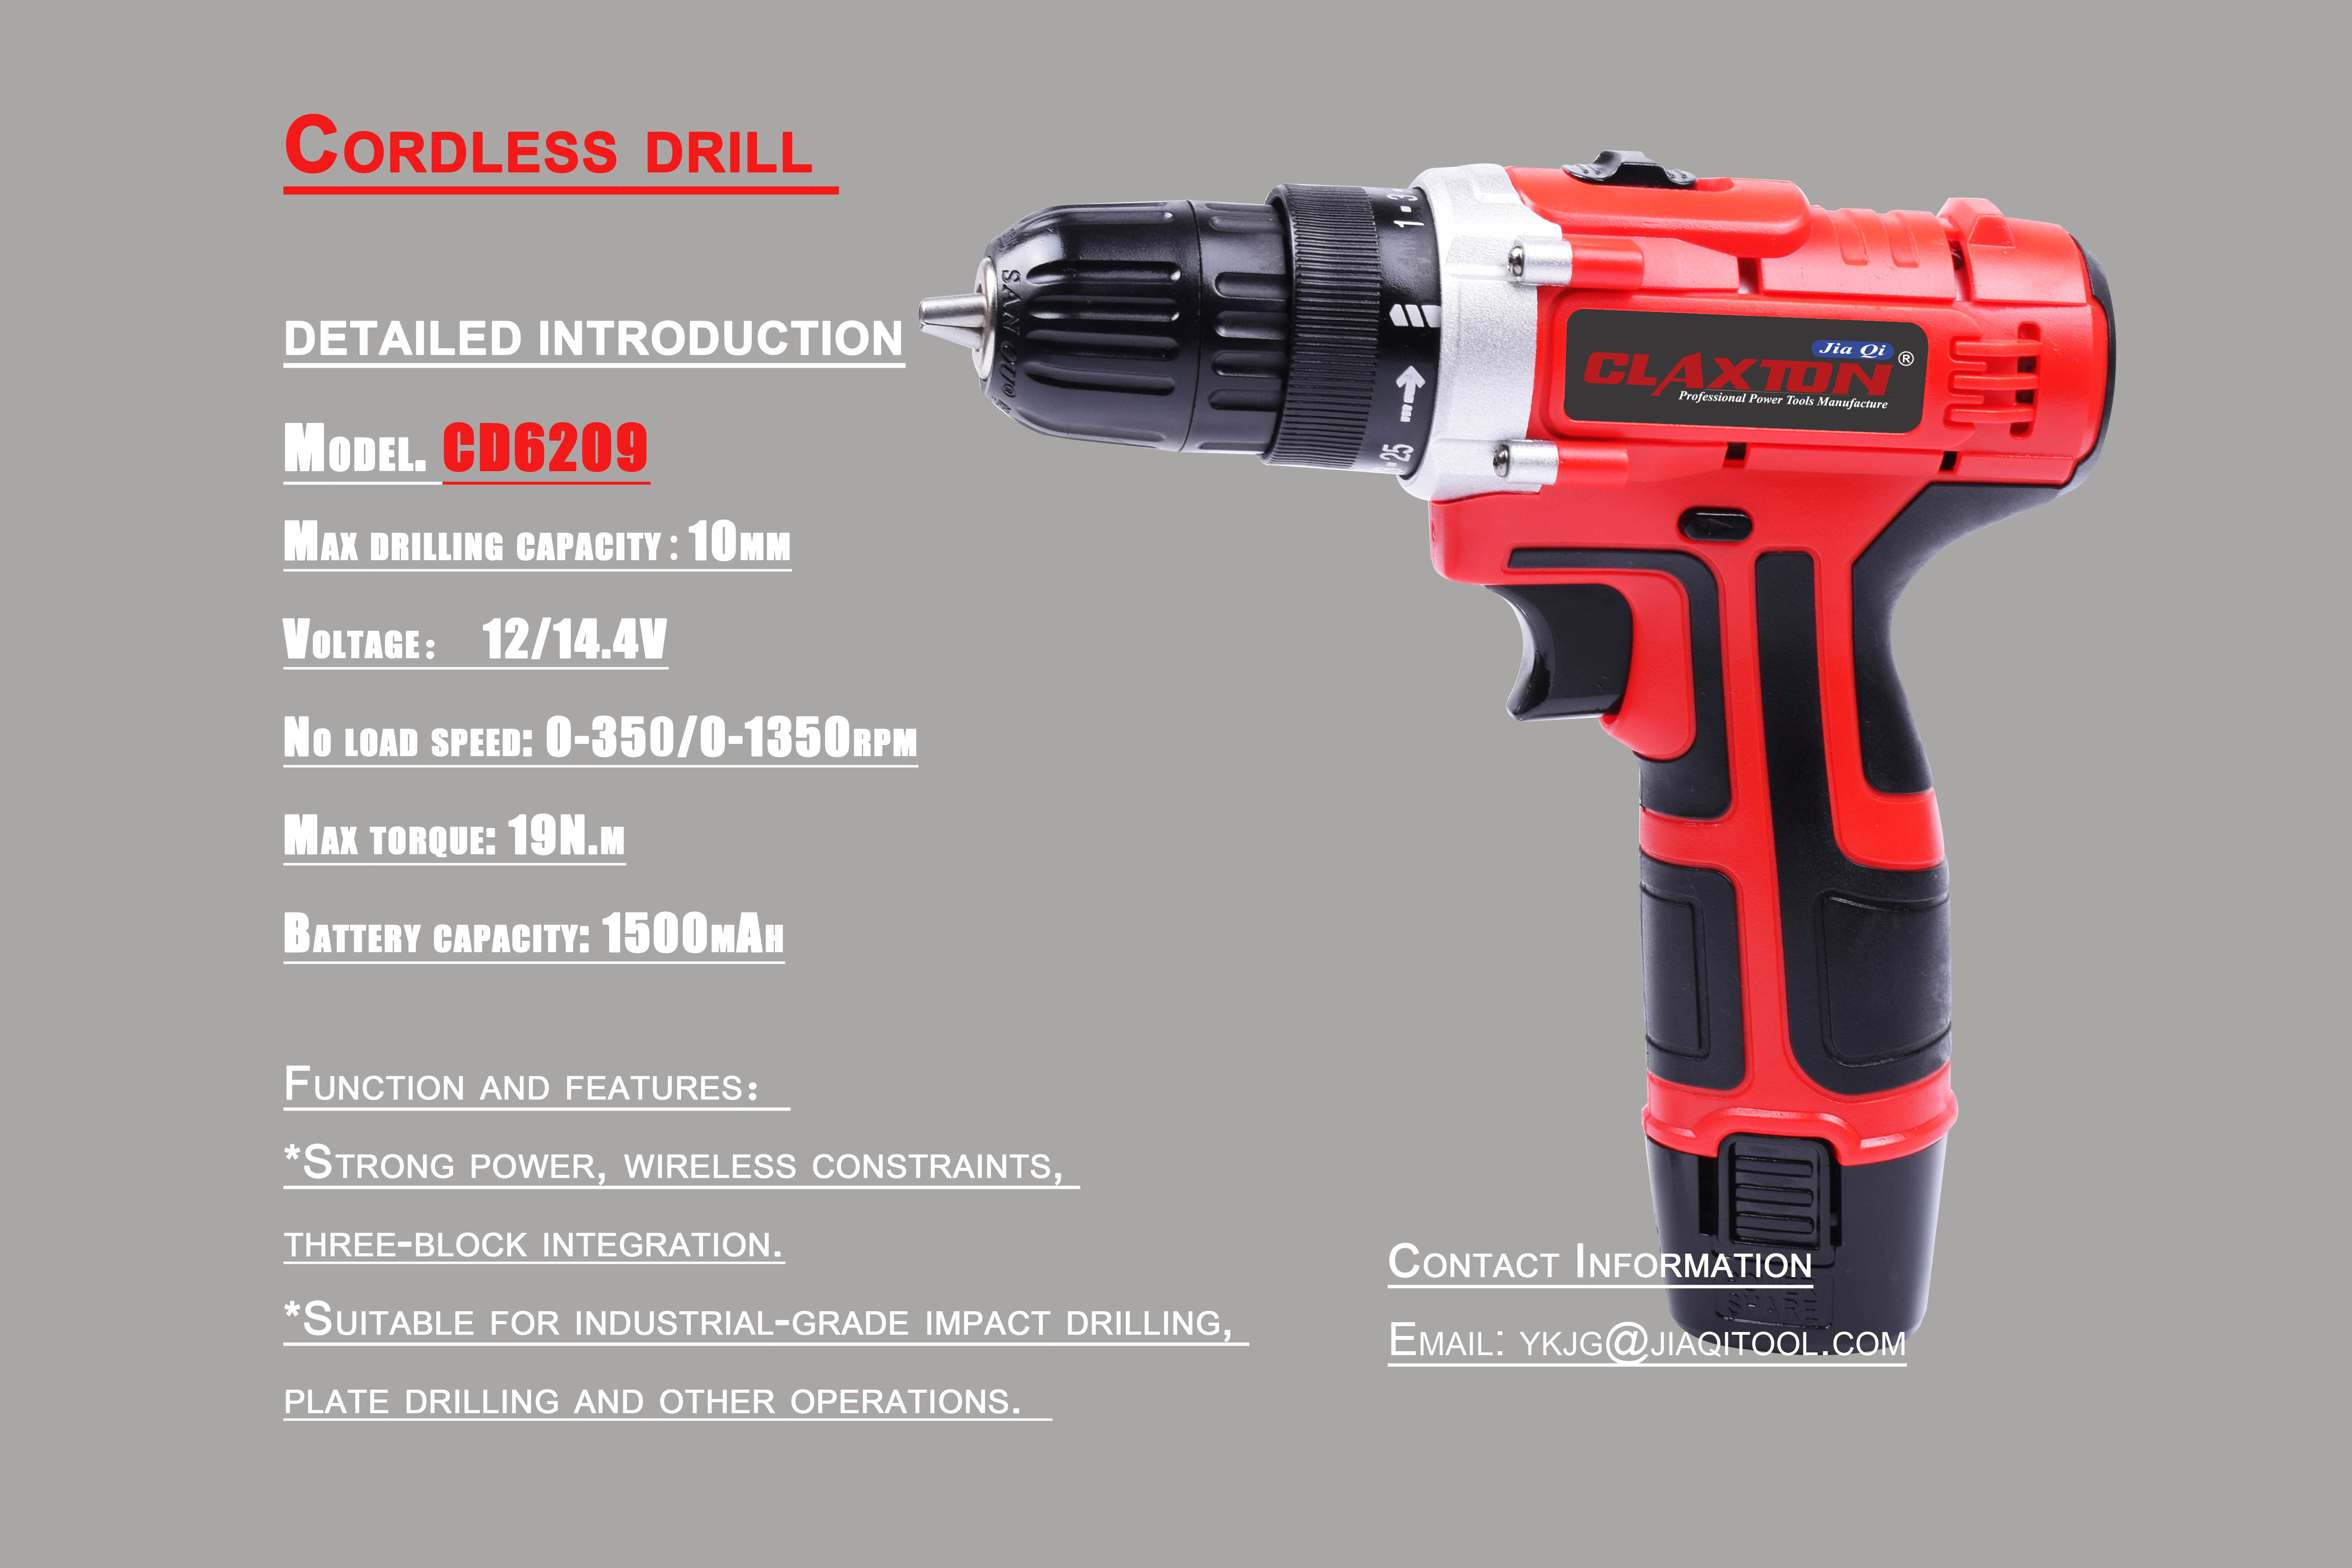 Cordless drill